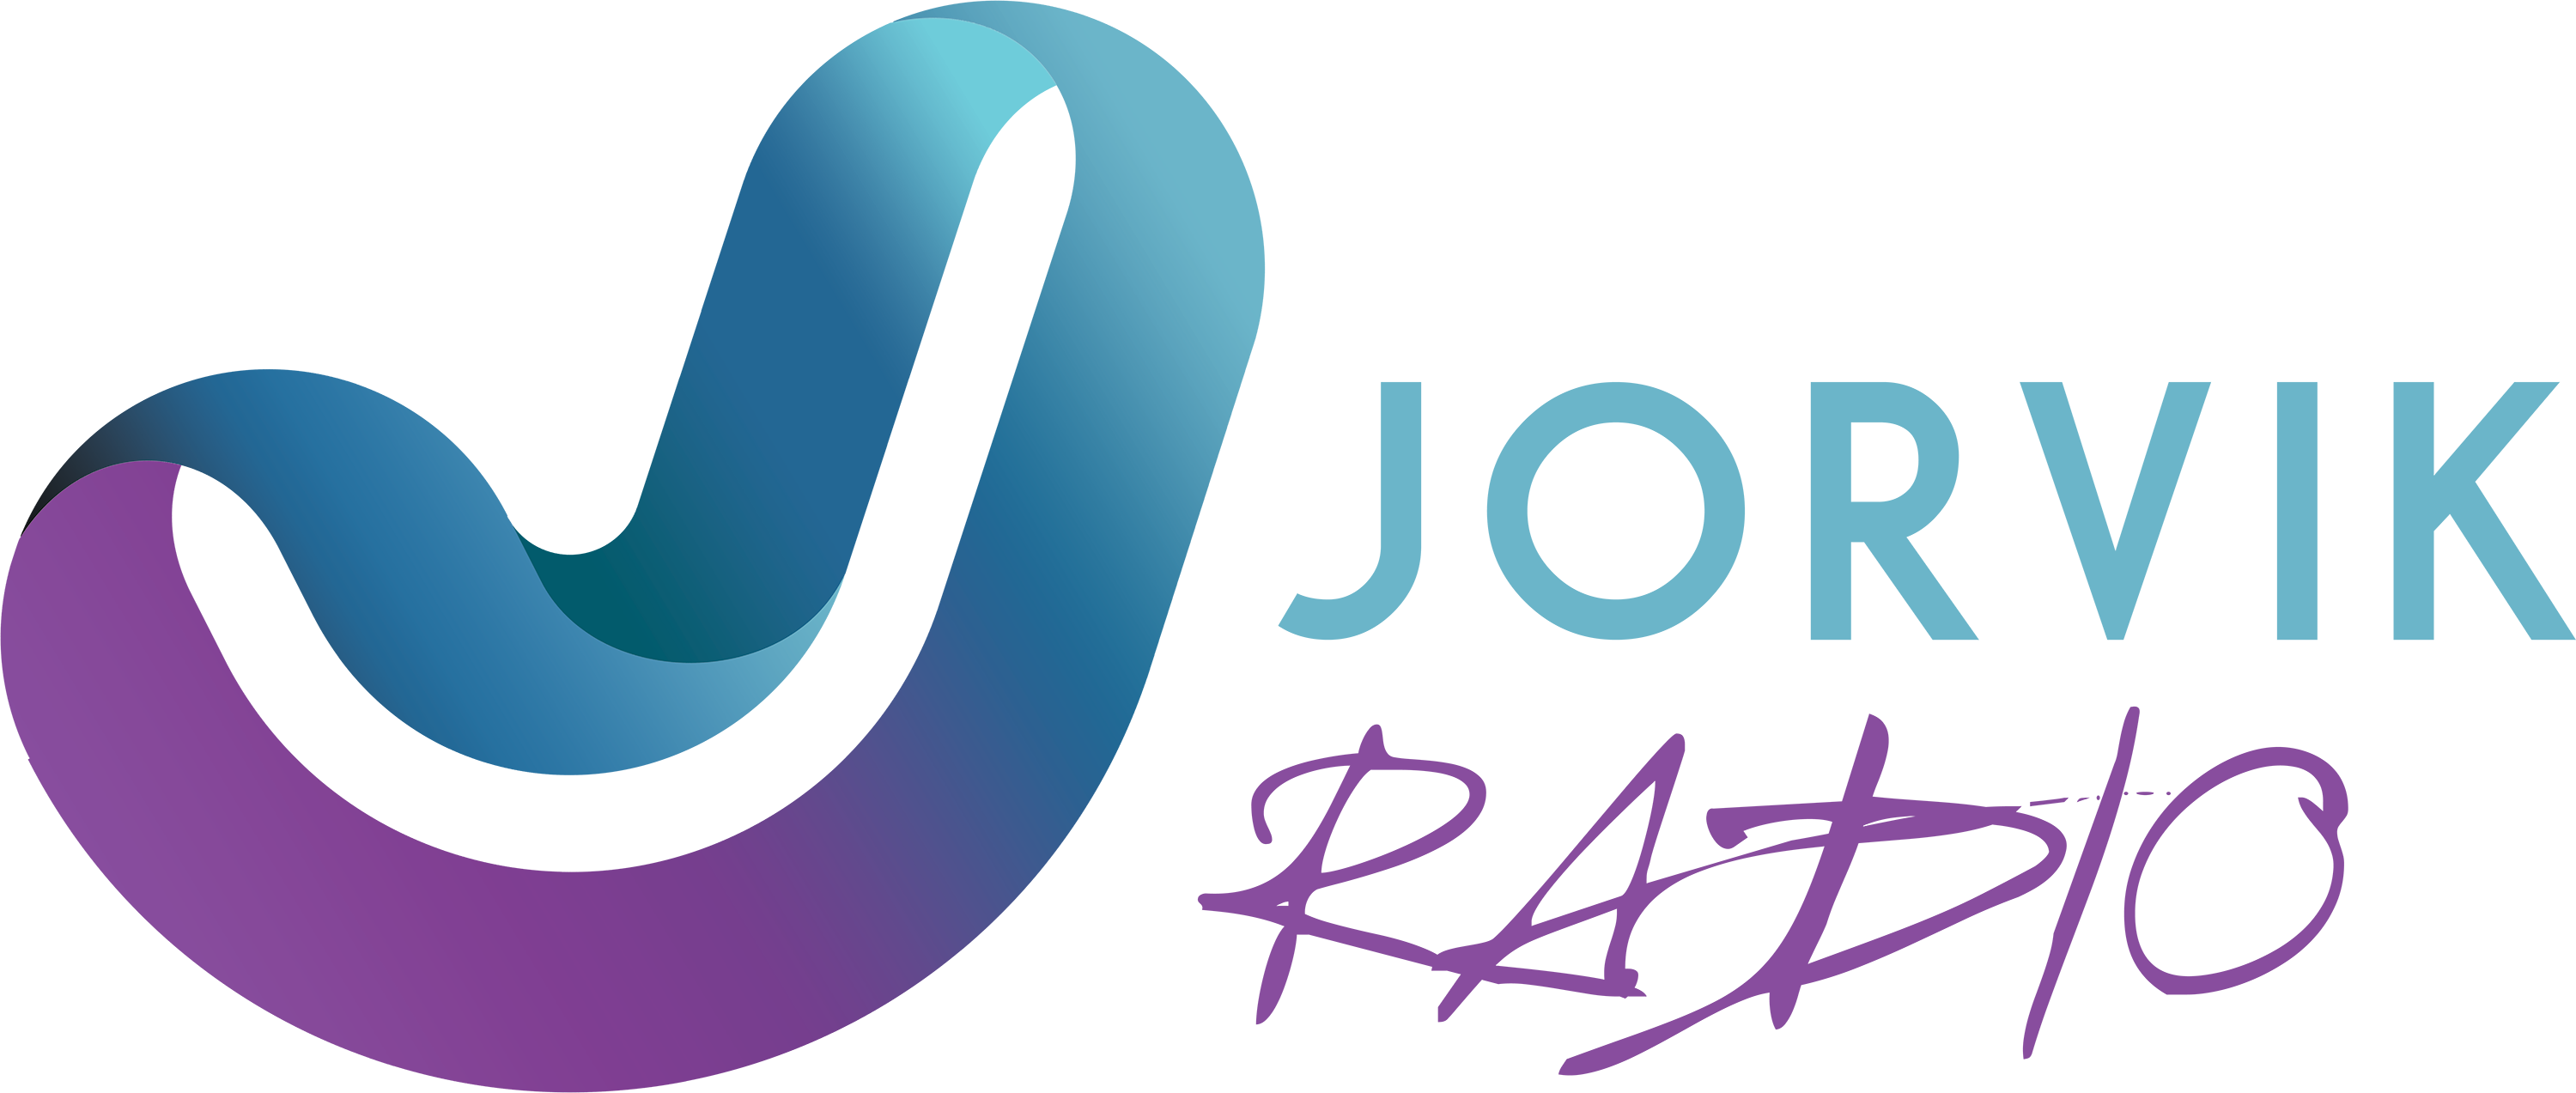 Jorvik Radio